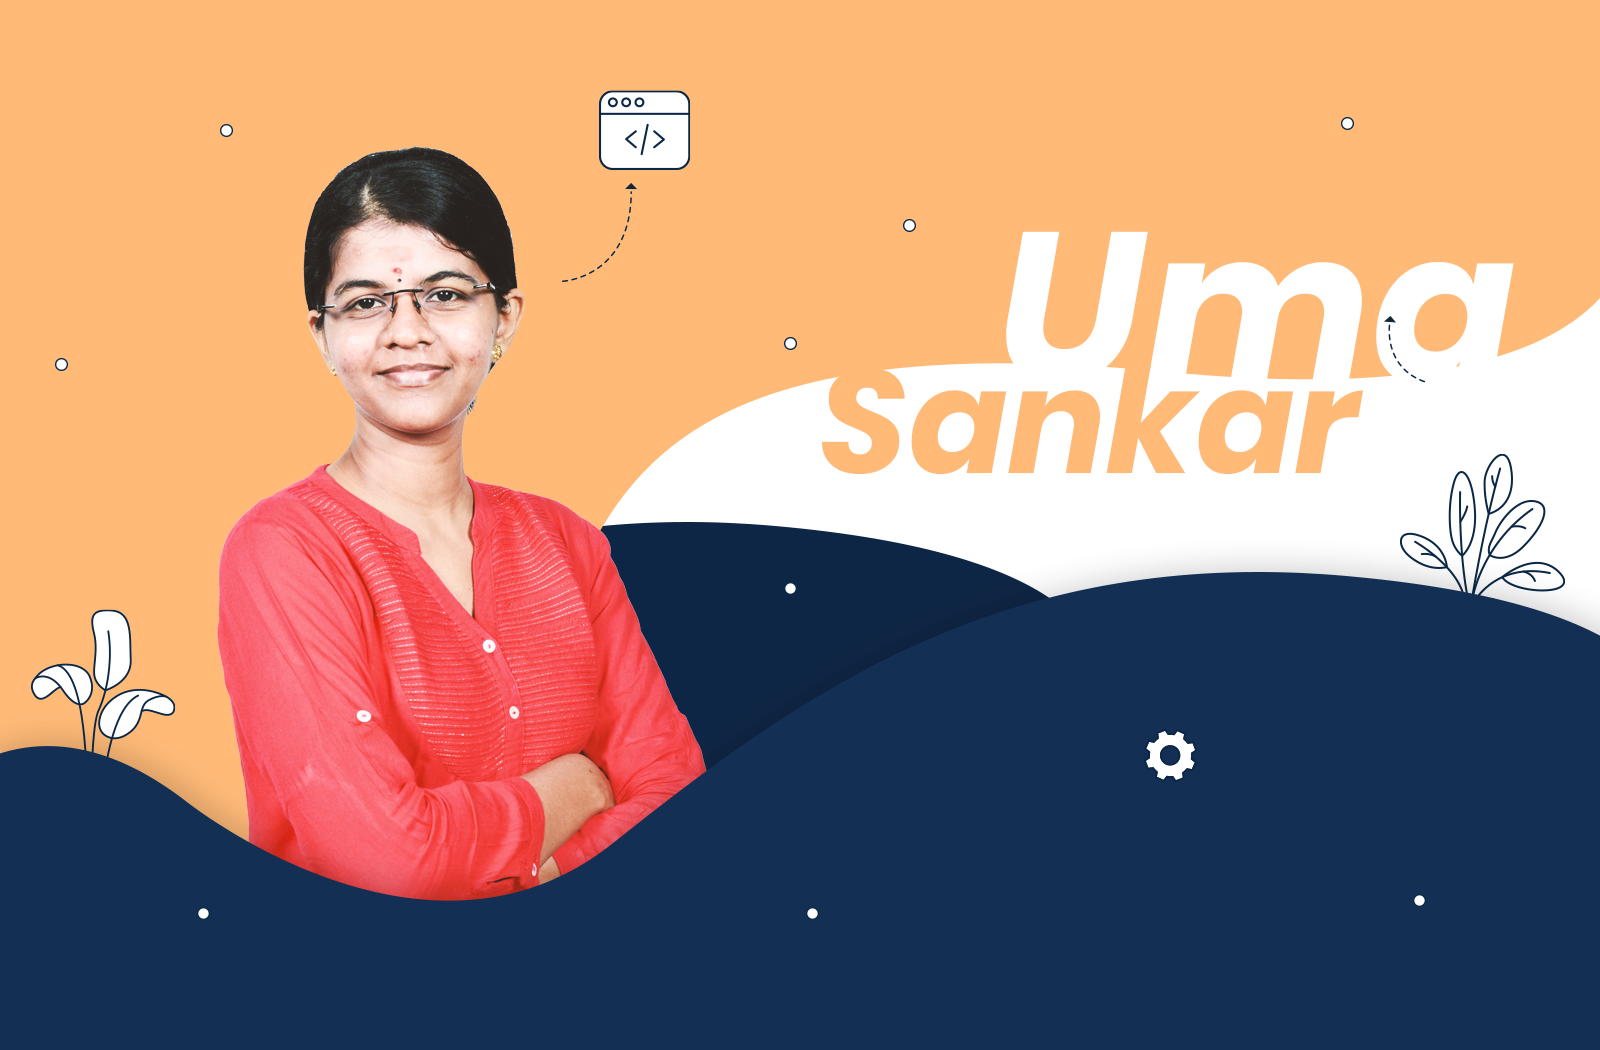 Software Dev Lead Uma Sankar on Building to Uplift User Experience